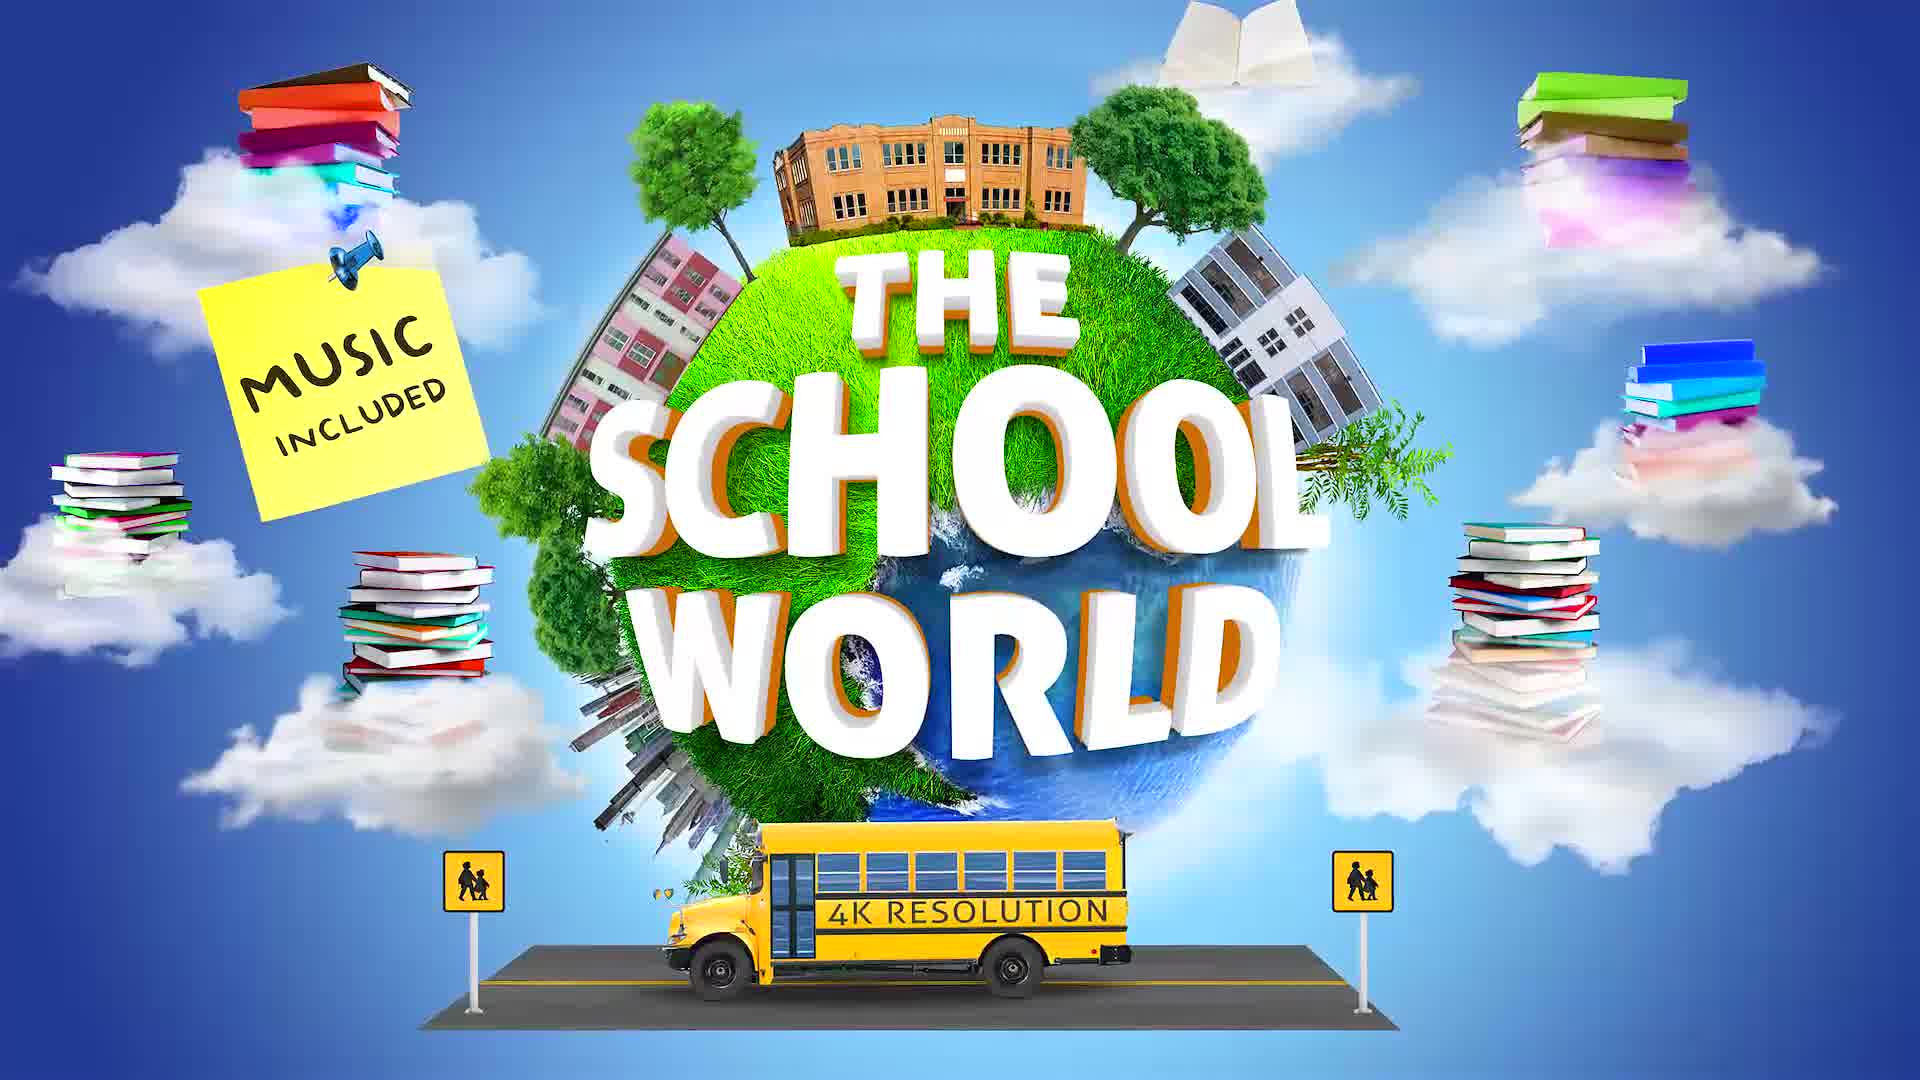 School Education Opener - Download Videohive 22606032